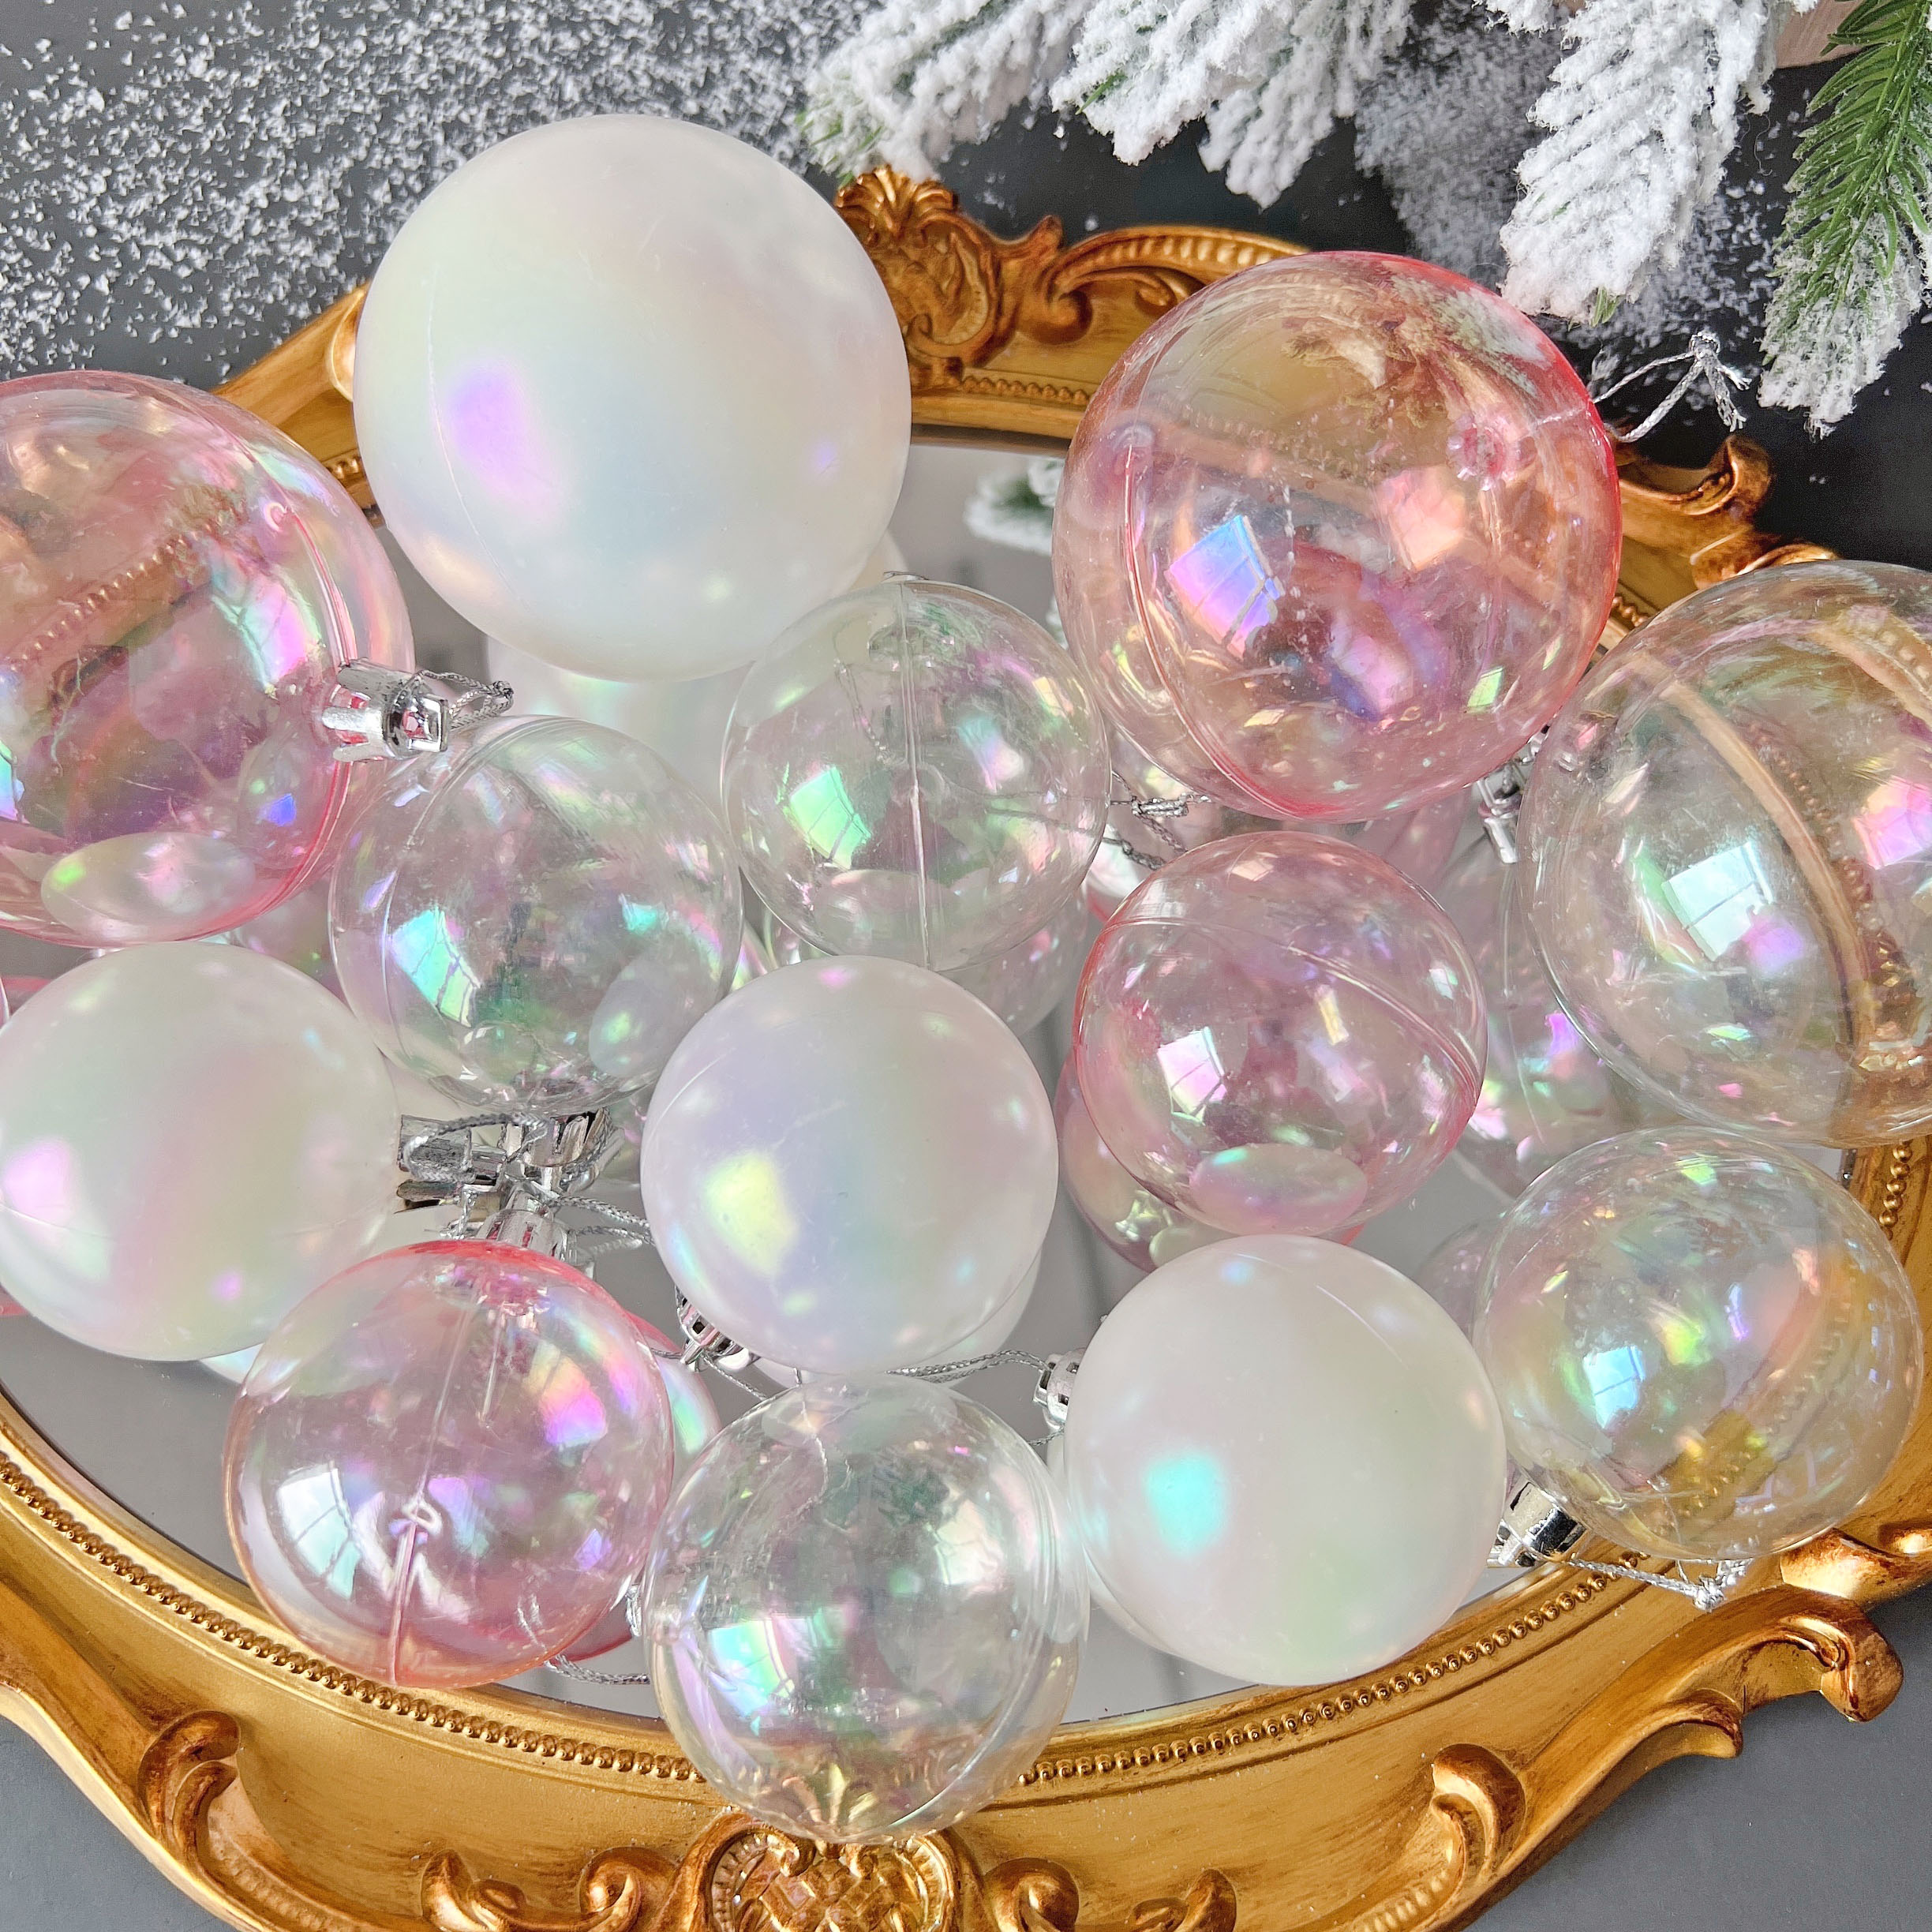 ins唯美梦幻炫彩球透明七彩泡泡球圣诞球圣诞树装饰挂球橱窗装饰